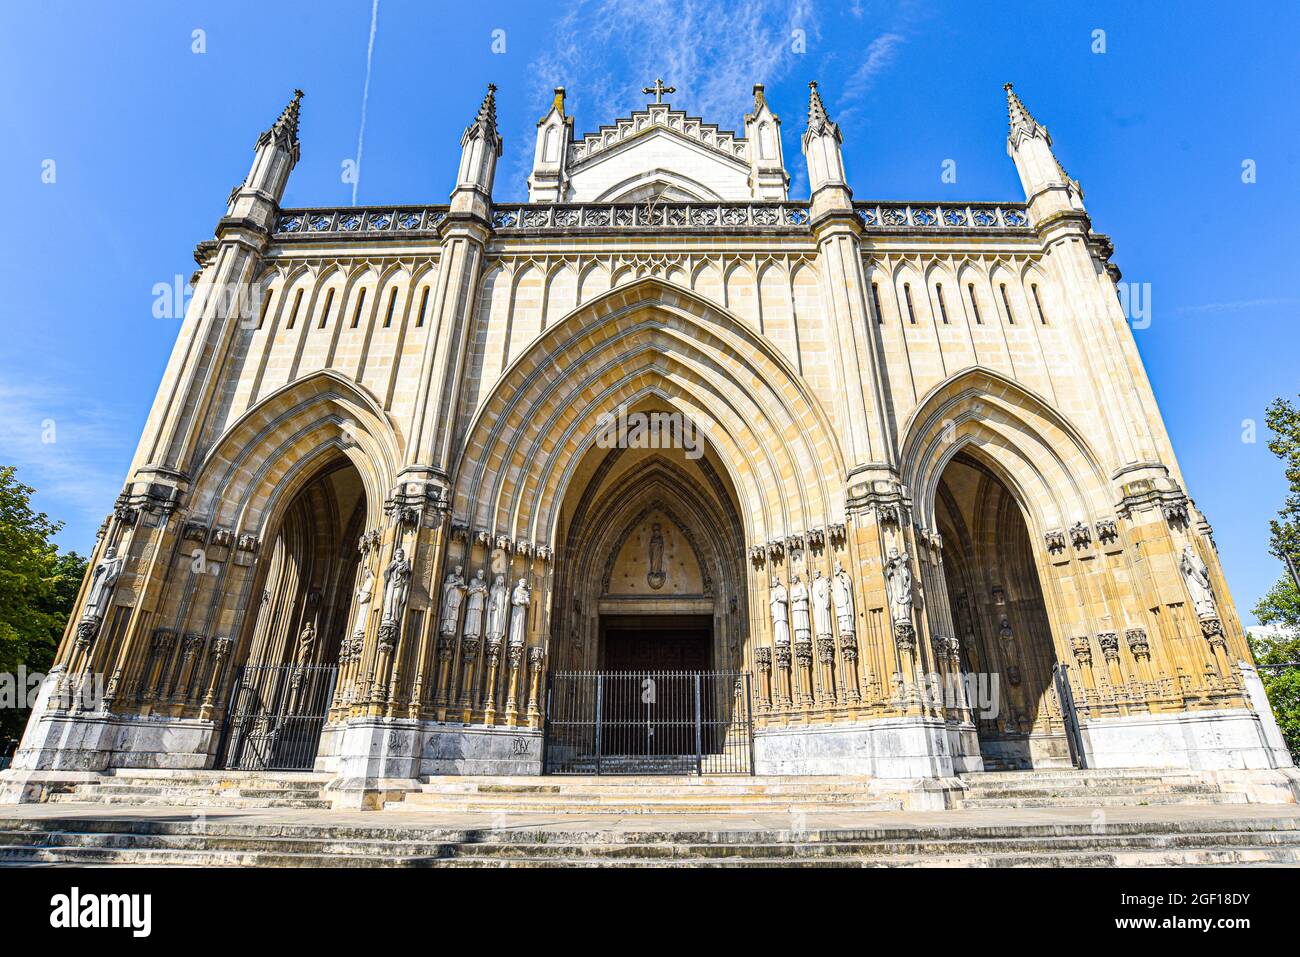 Vitoria gasteiz cathedral fotografías e imágenes de alta resolución - Alamy